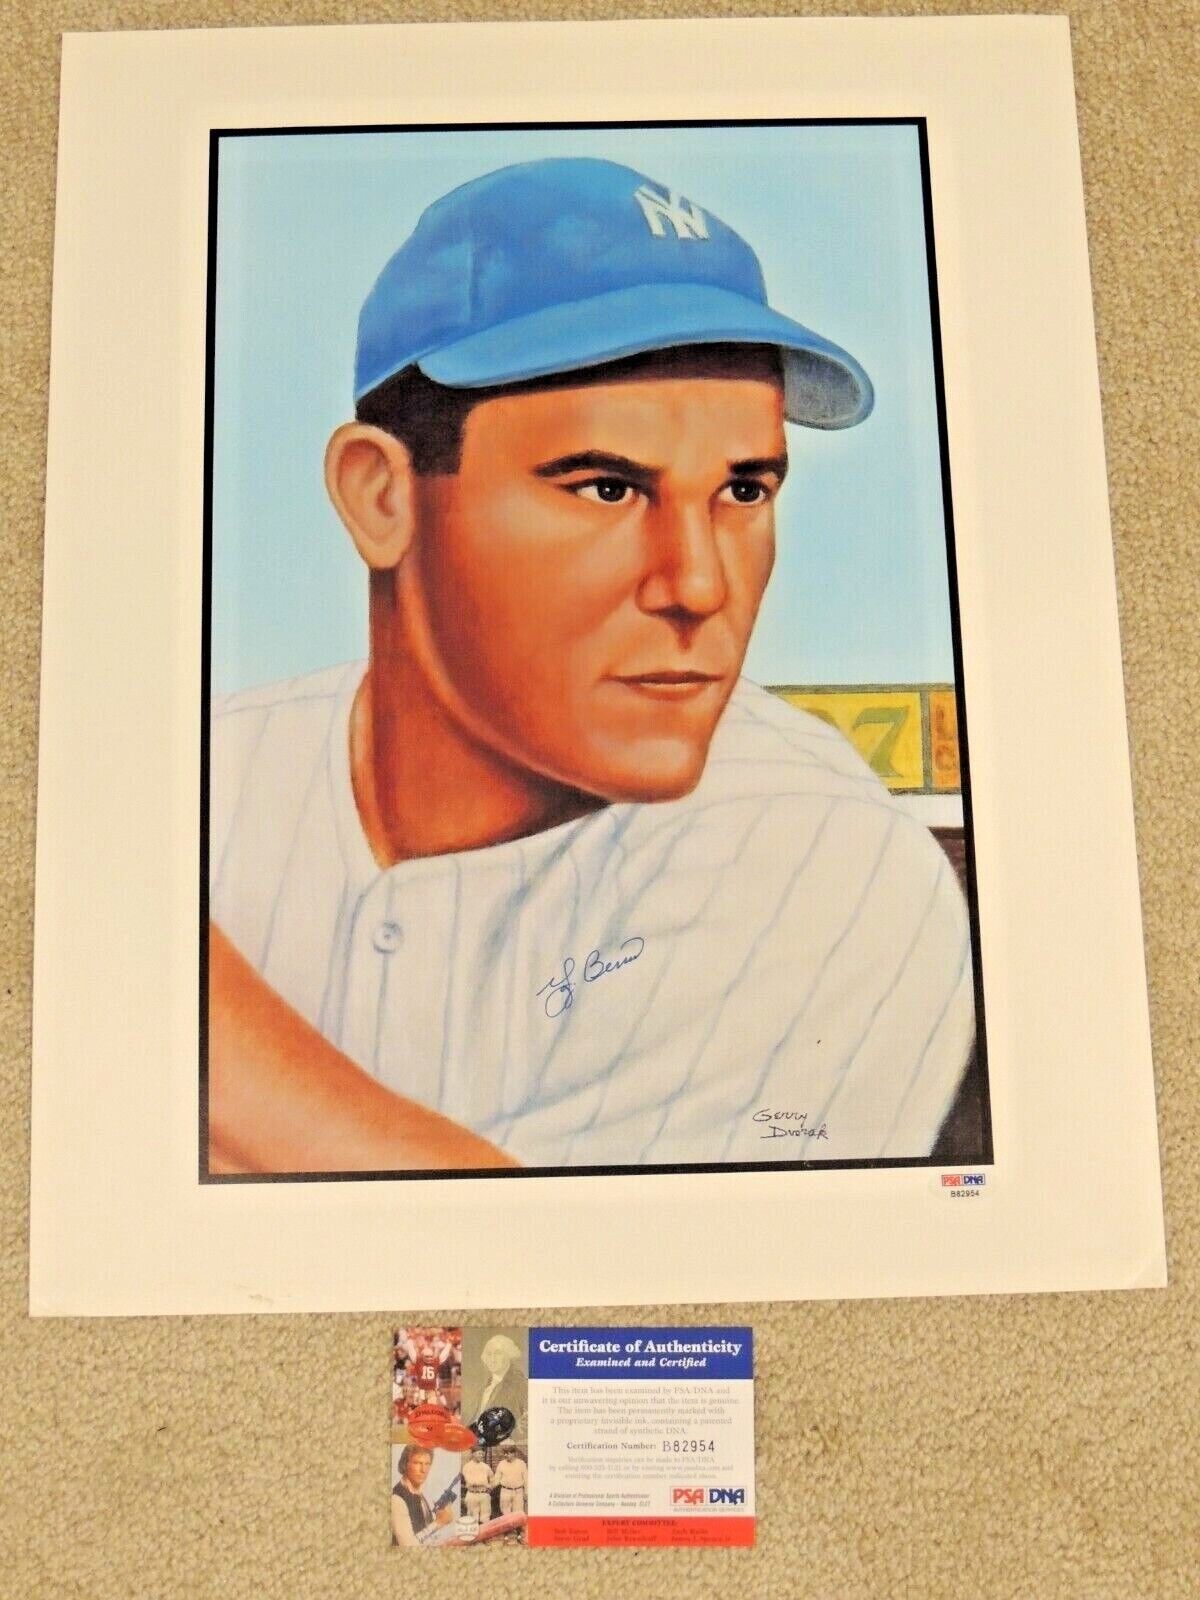 Sold at Auction: Yogi Berra Signed Yankees Jersey COA